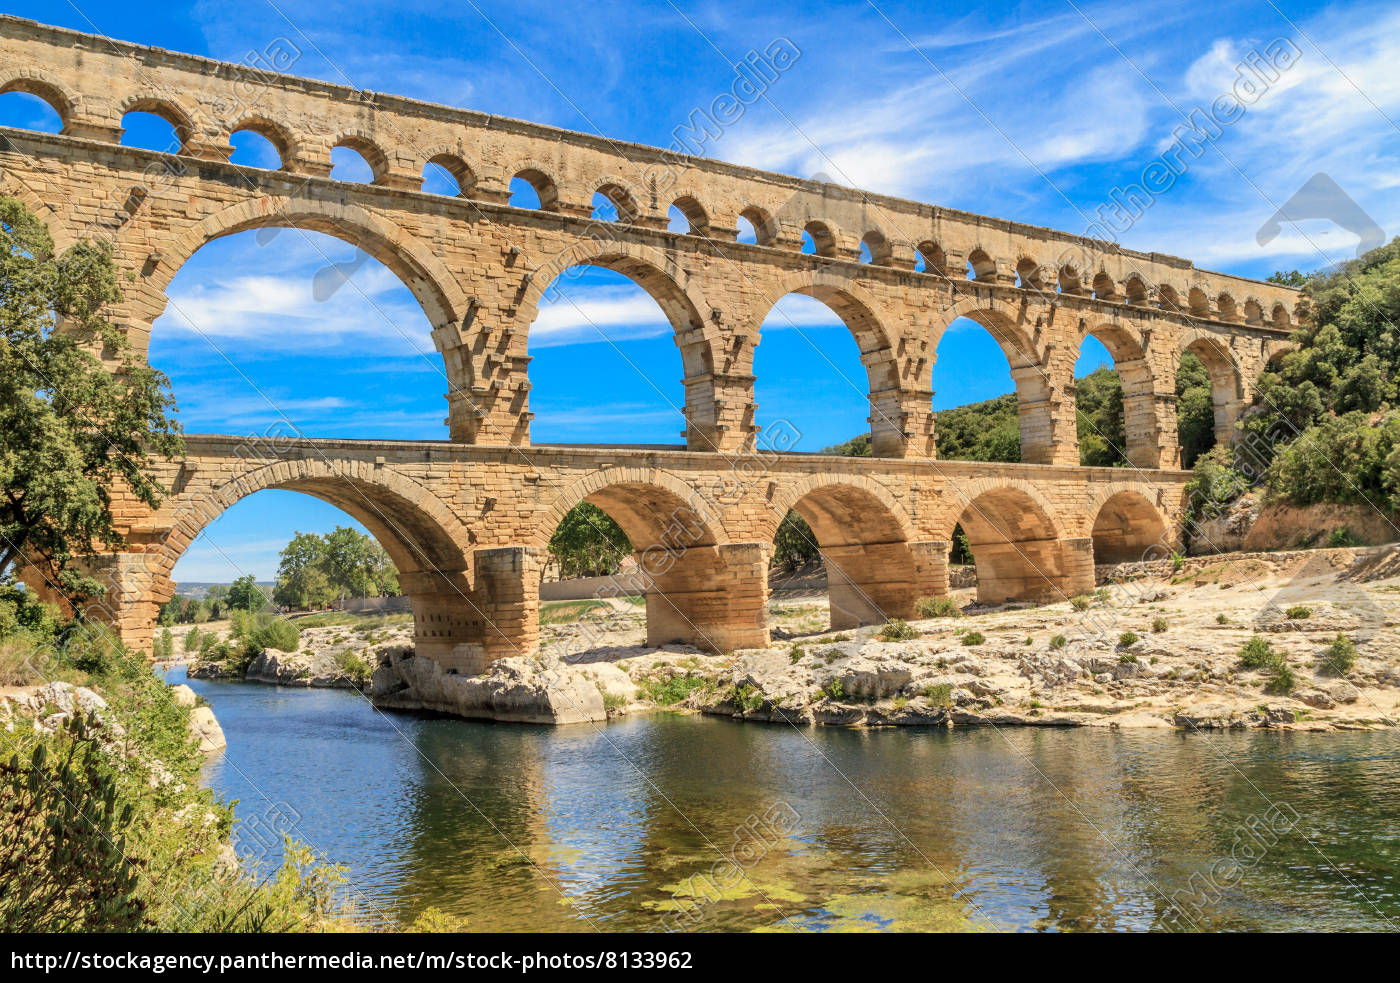 Pont du Gard Nimes Provence France - Stock image - #8133962 ...